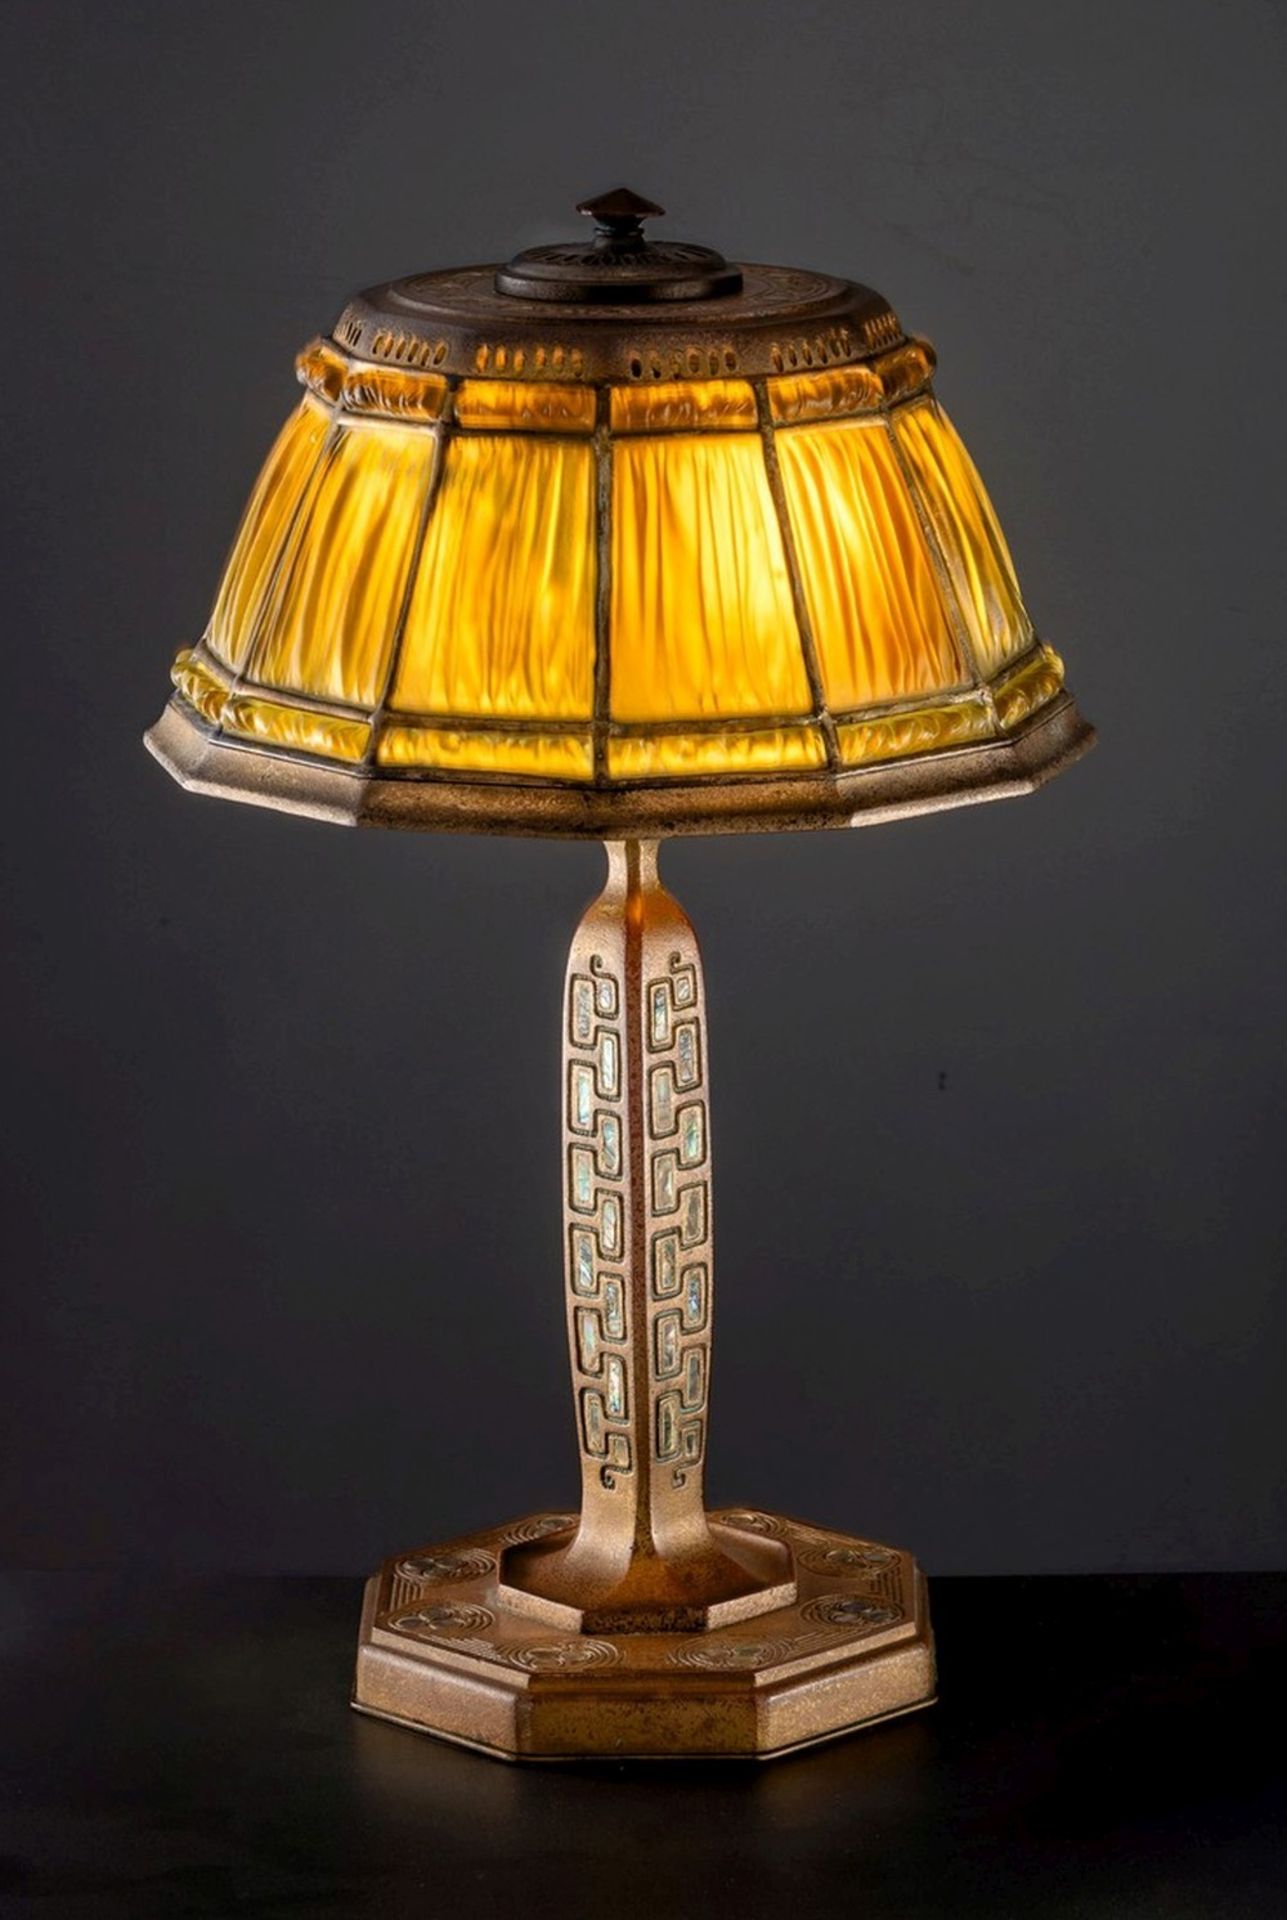 Tischlampe "Abalone Linenfold" Tiffany Studios, New York, um 1910 - Image 2 of 2